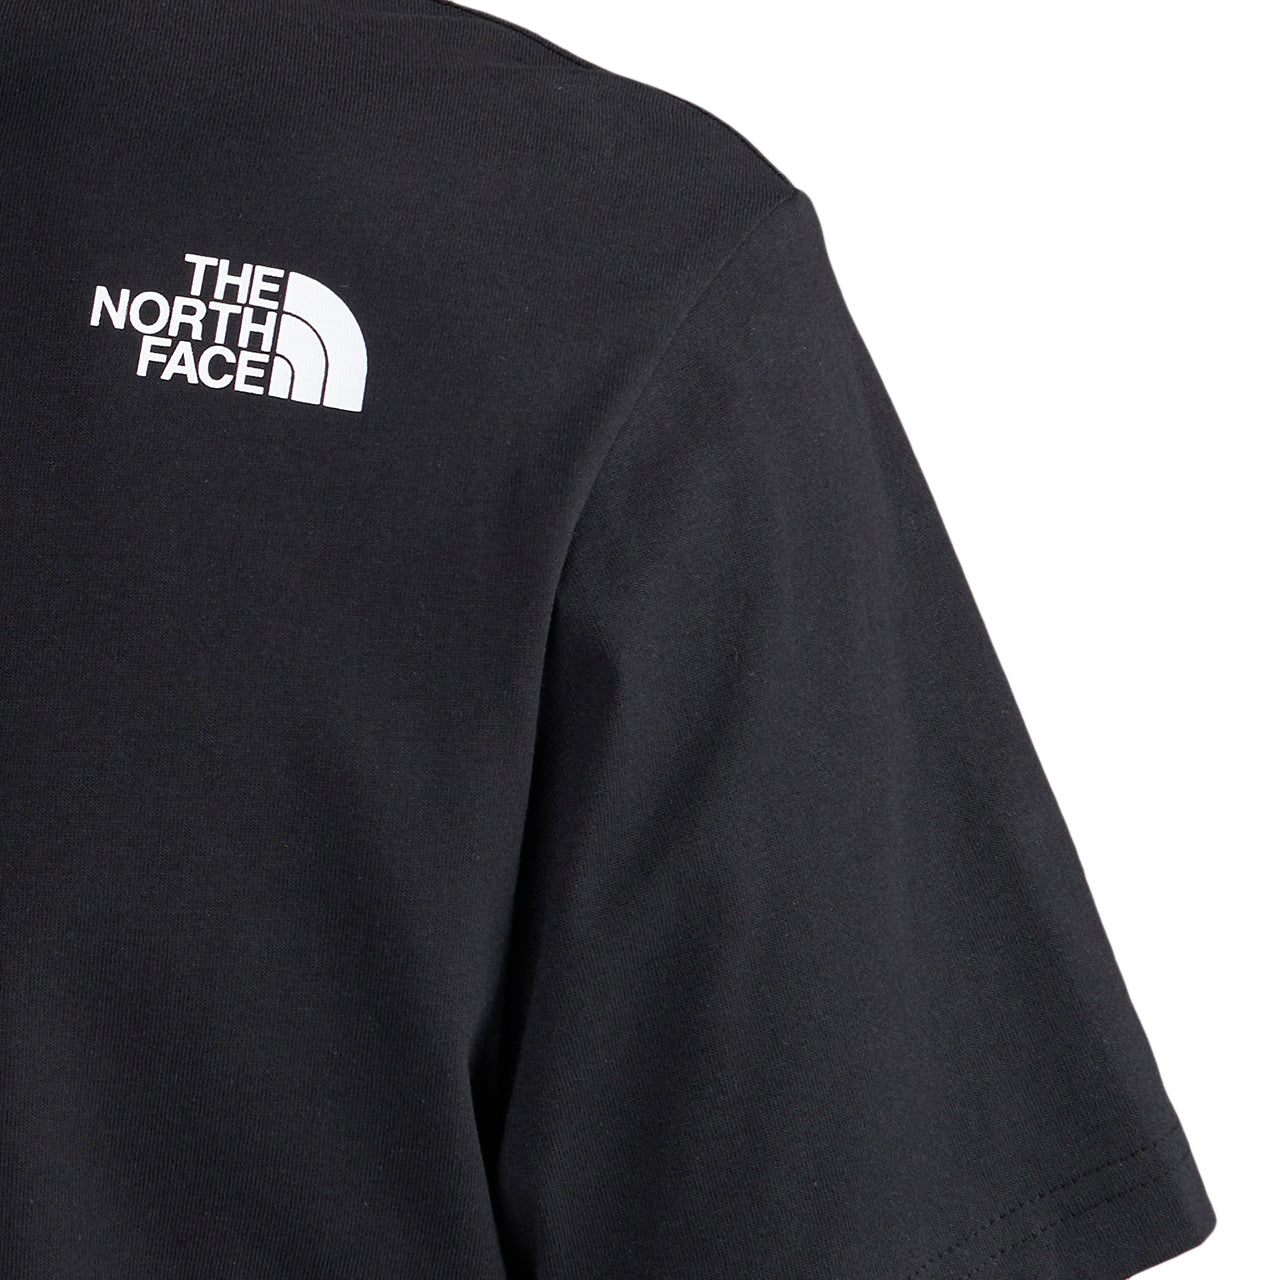 The North Face Berkeley California T-Shirt (Schwarz)  - Allike Store